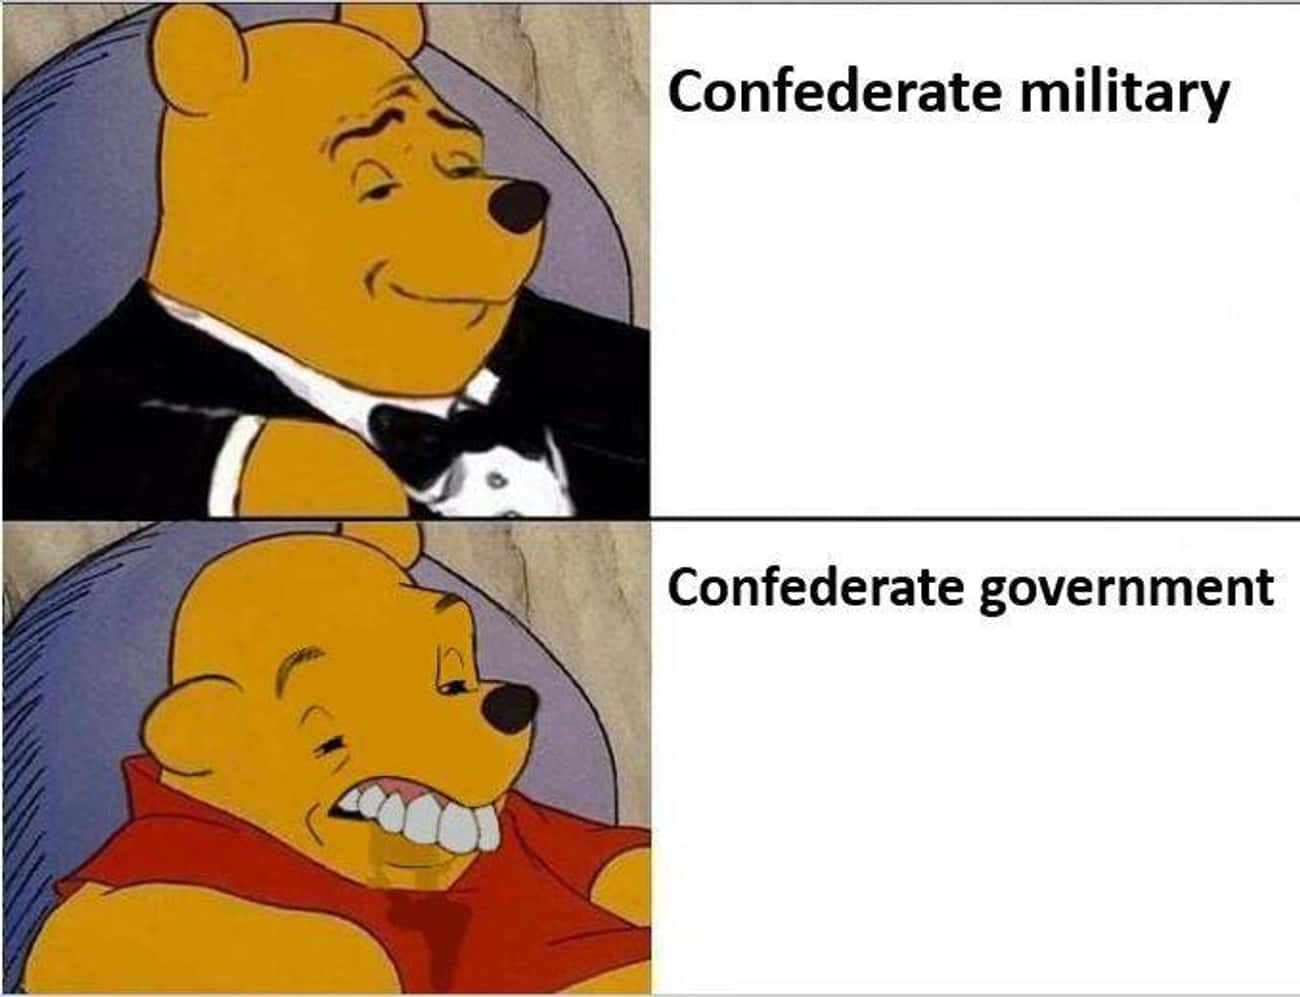 The confederacy